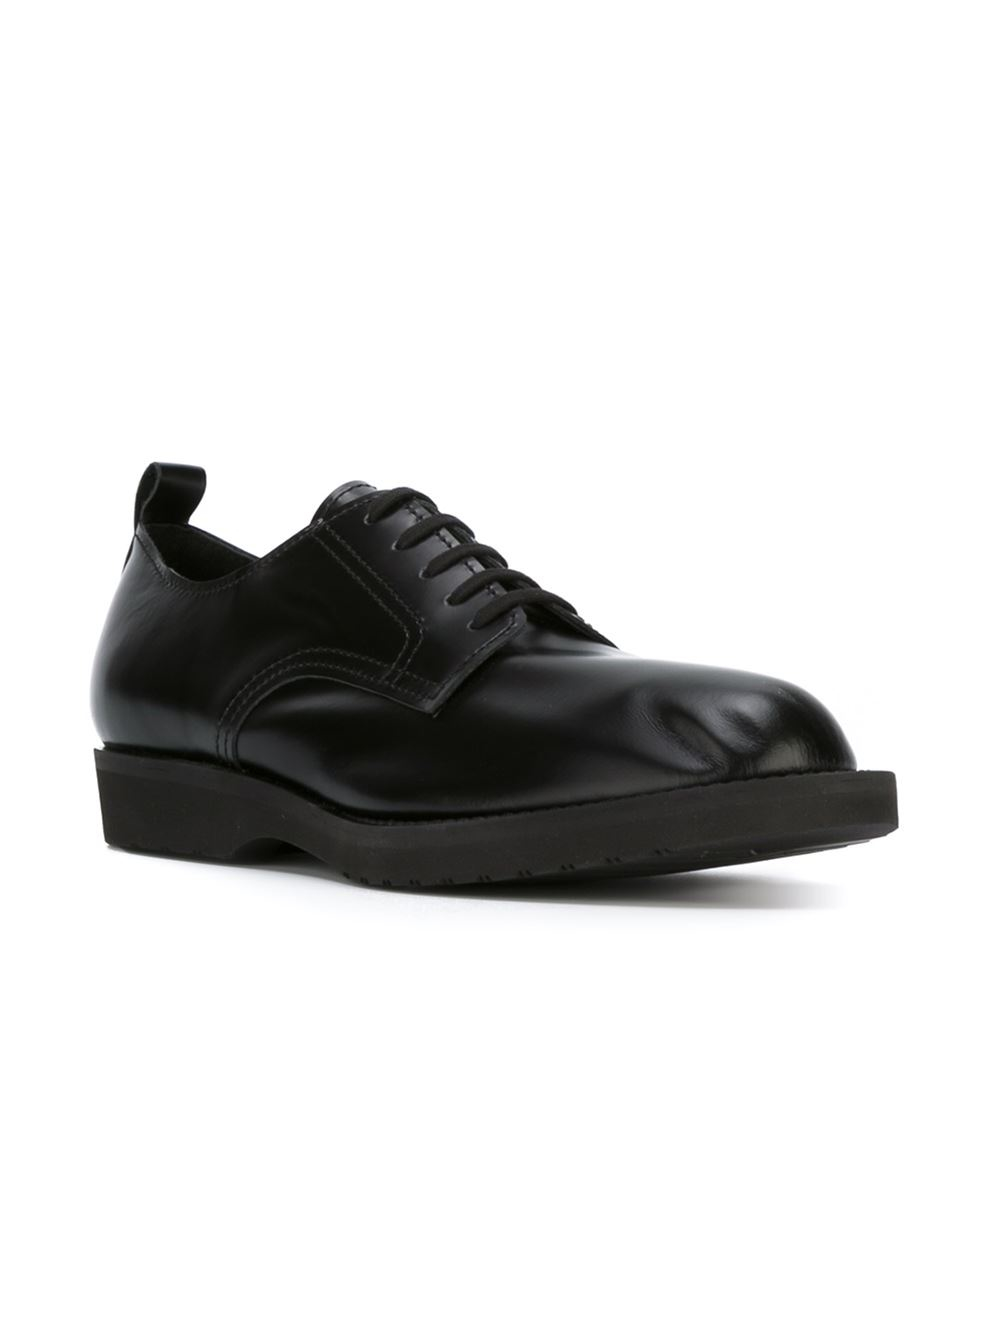 Comme des Garçons Leather Derby Shoes in Black for Men - Lyst